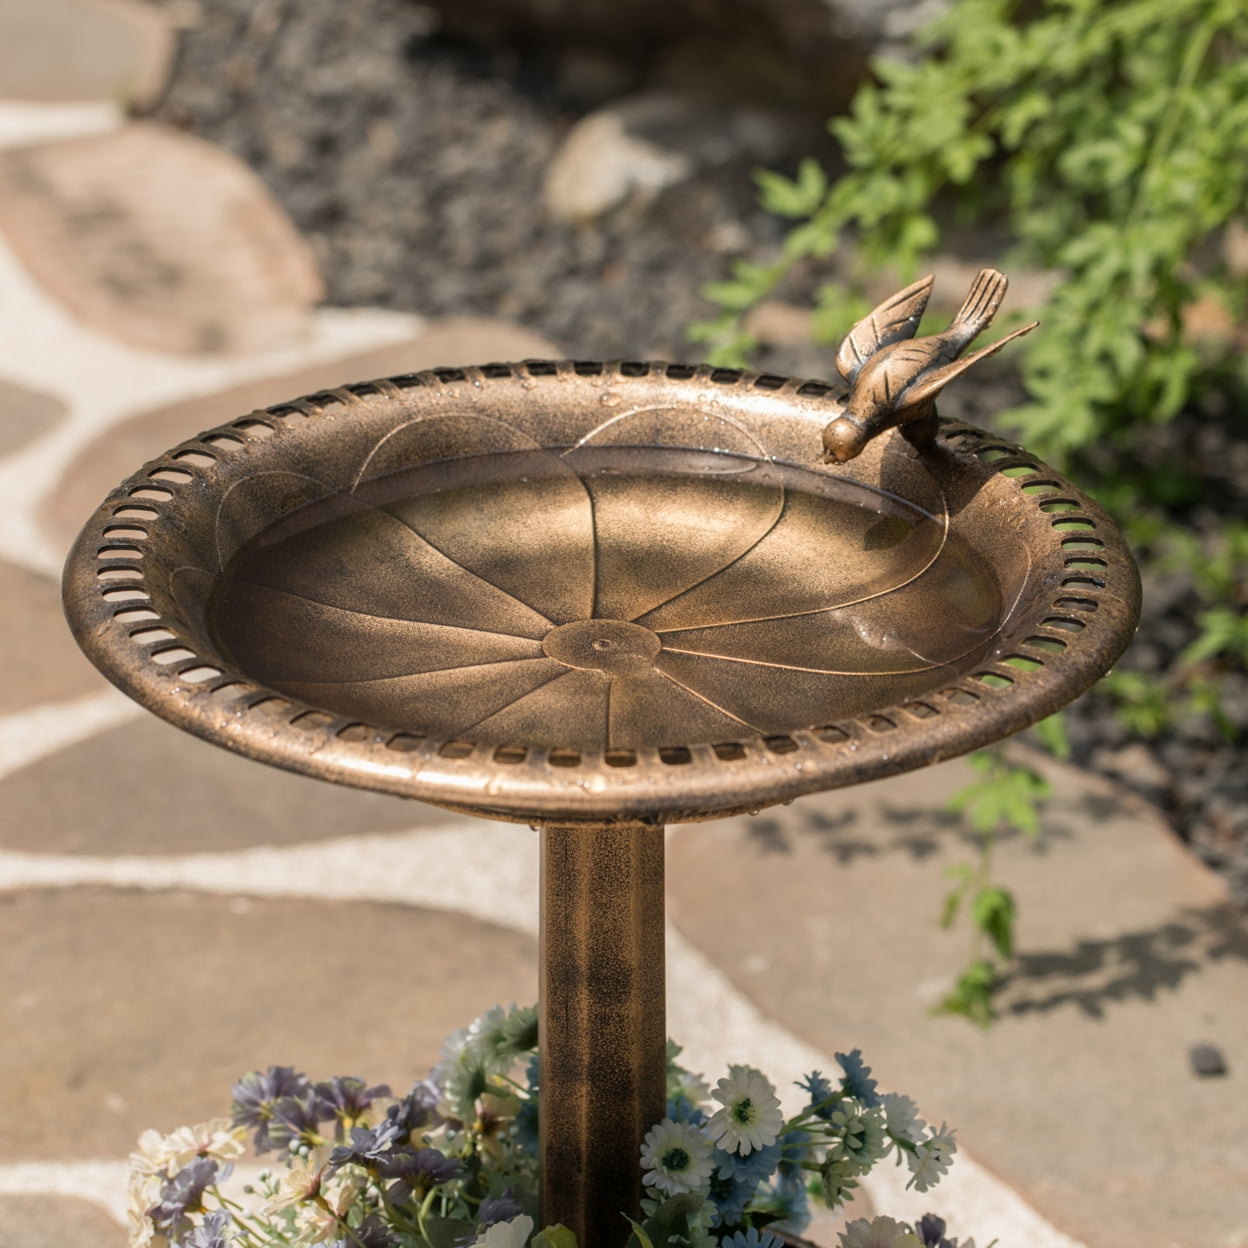 Outdoor Garden Bird Bath and Solar Powered Round Pond Fountain with Planter Bowl, Copper